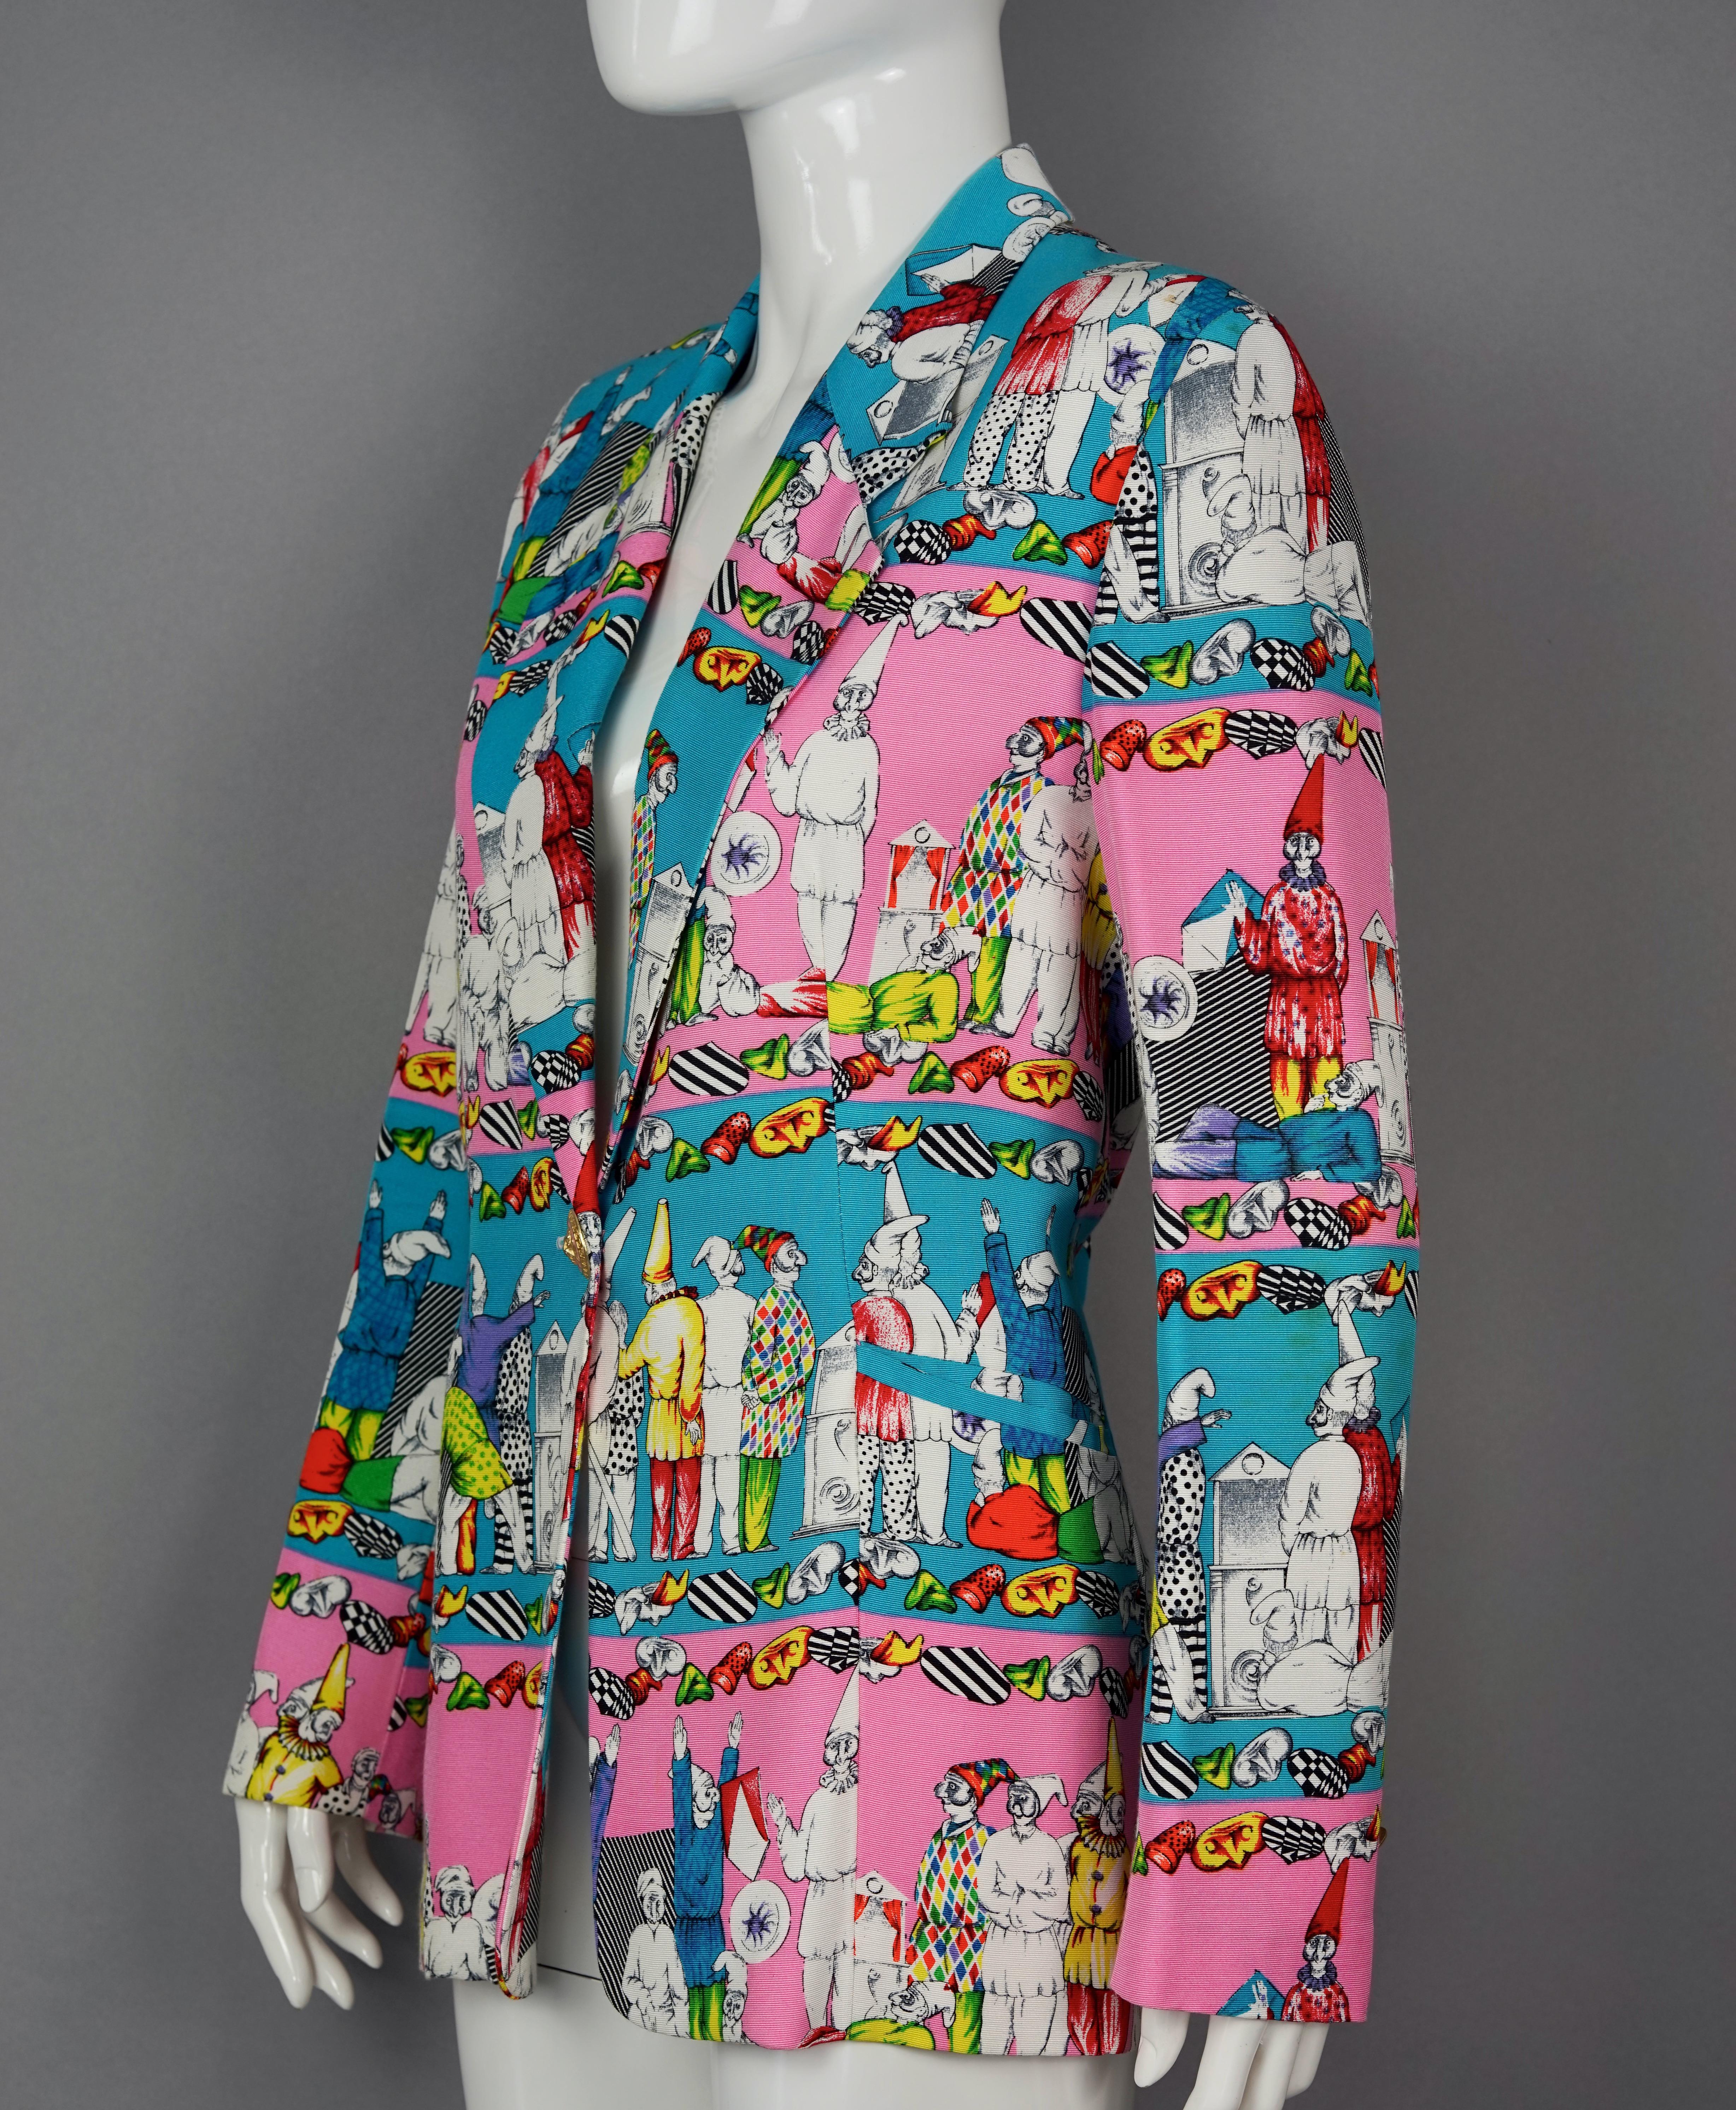 Marina Sitbon pour kamosho París Vintage Barroco impresión chaqueta M 44 RRP £ 499